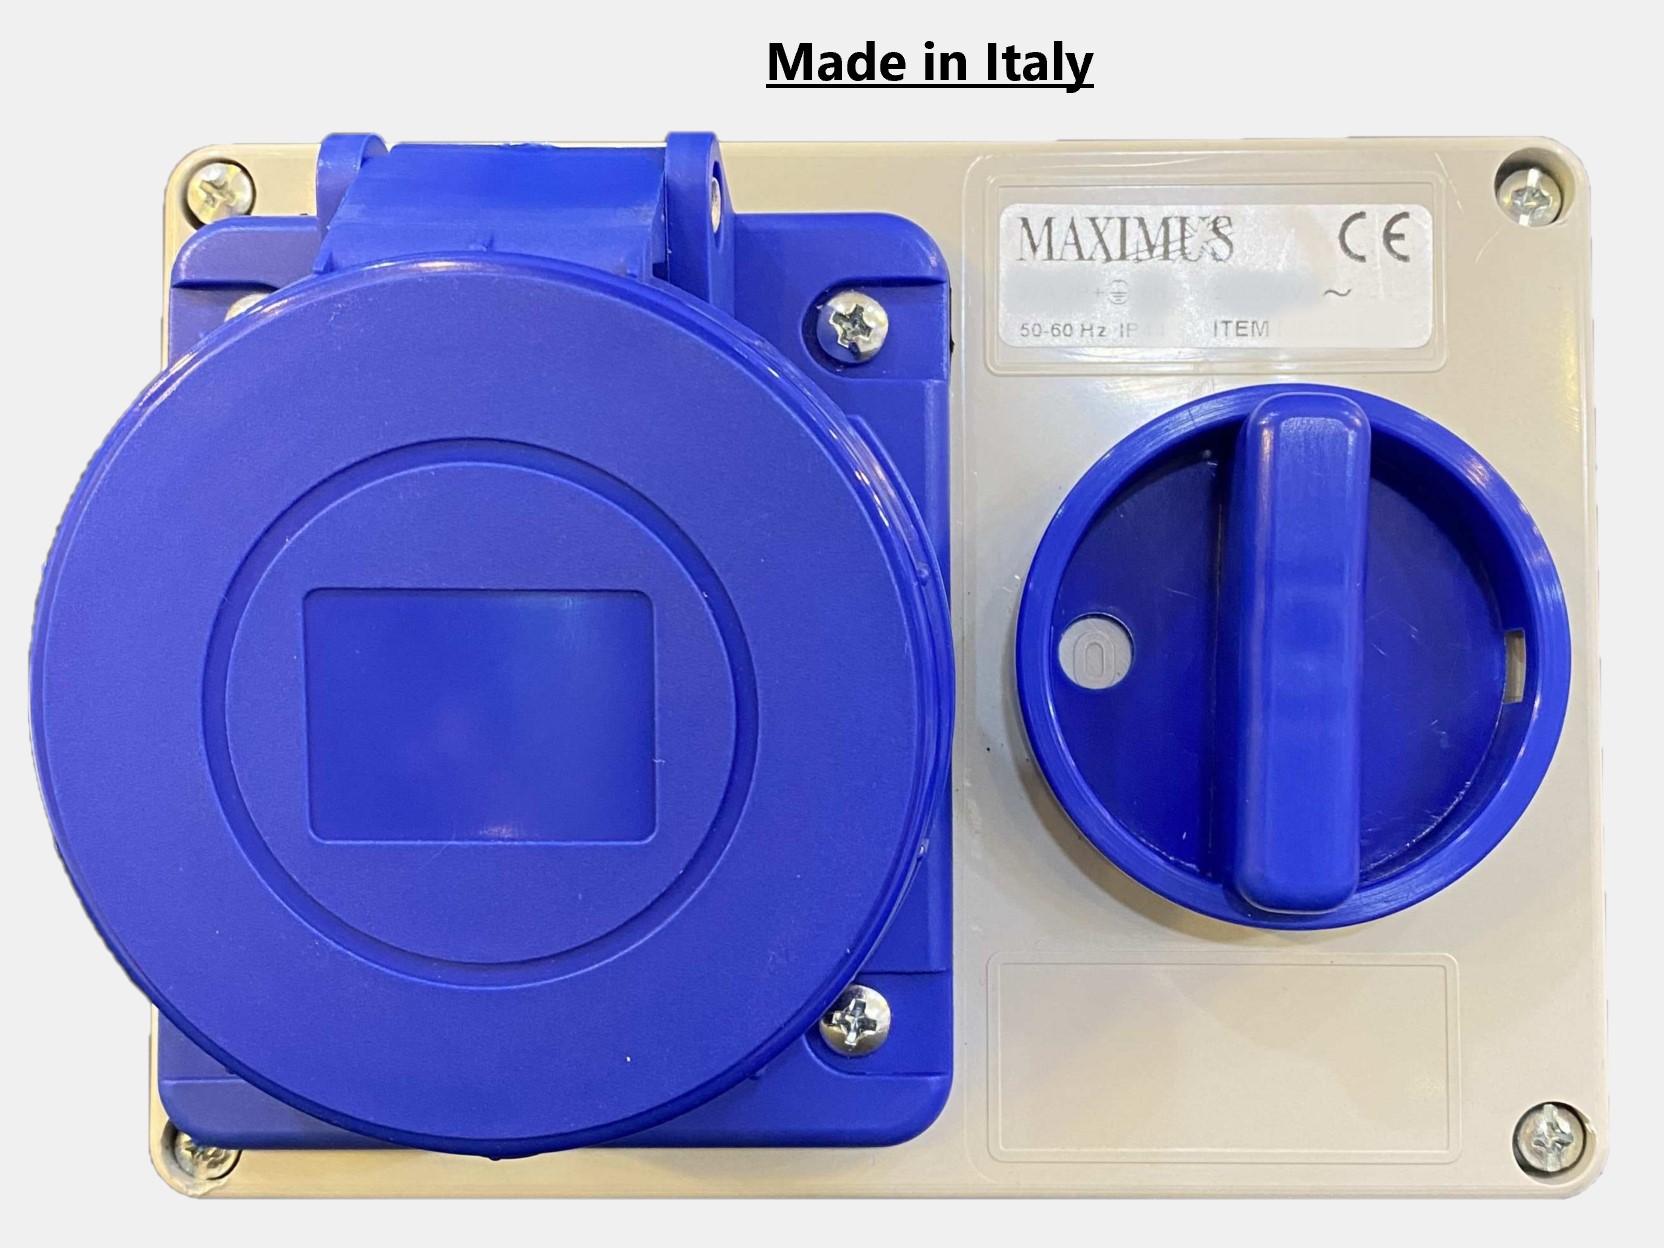 Maximus CONSERVAA Industrial Wall Interlock Socket - 32A 2 POLE+E - 220/240V - IP44 (Blue color - MR3234B6)